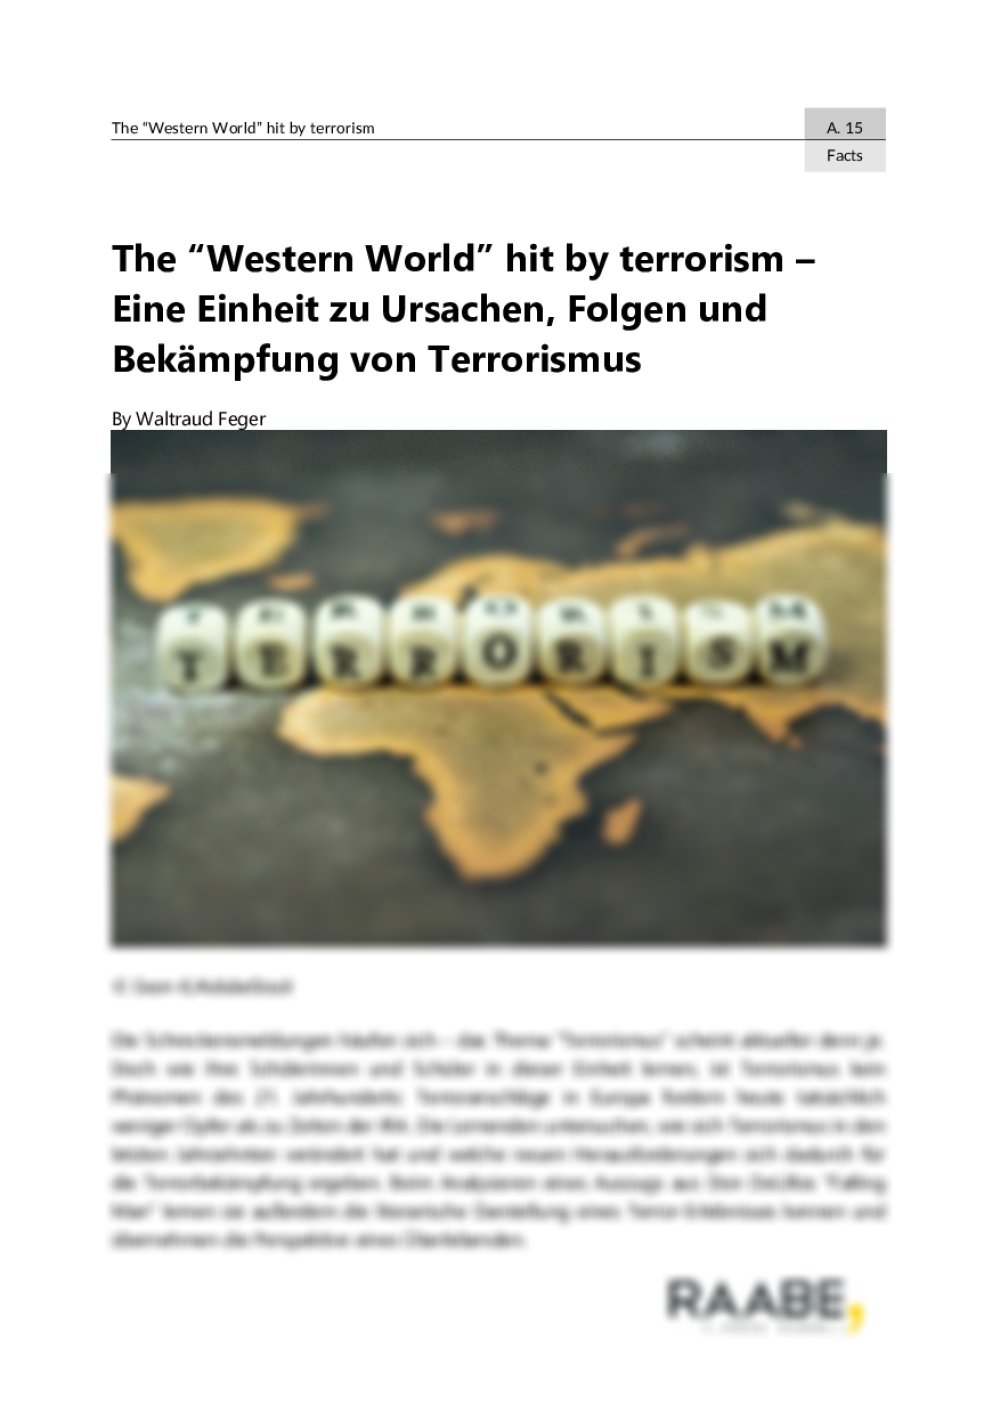 The “Western World” hit by terrorism - Seite 1